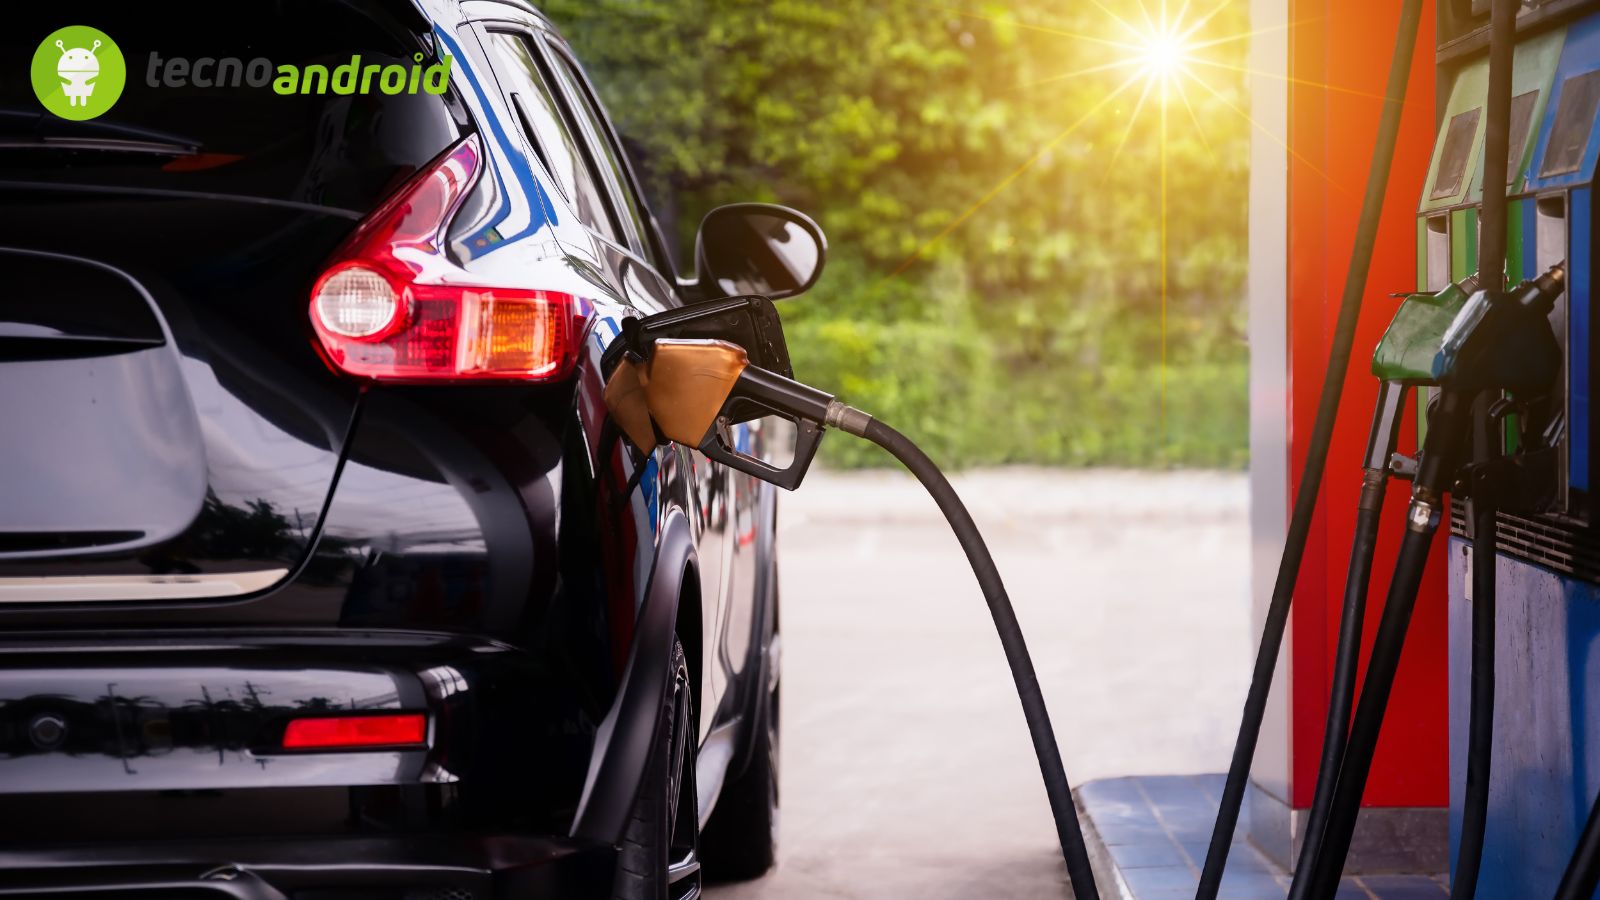 benzina, idrogeno, diesel elettrico differenze carburanti auto